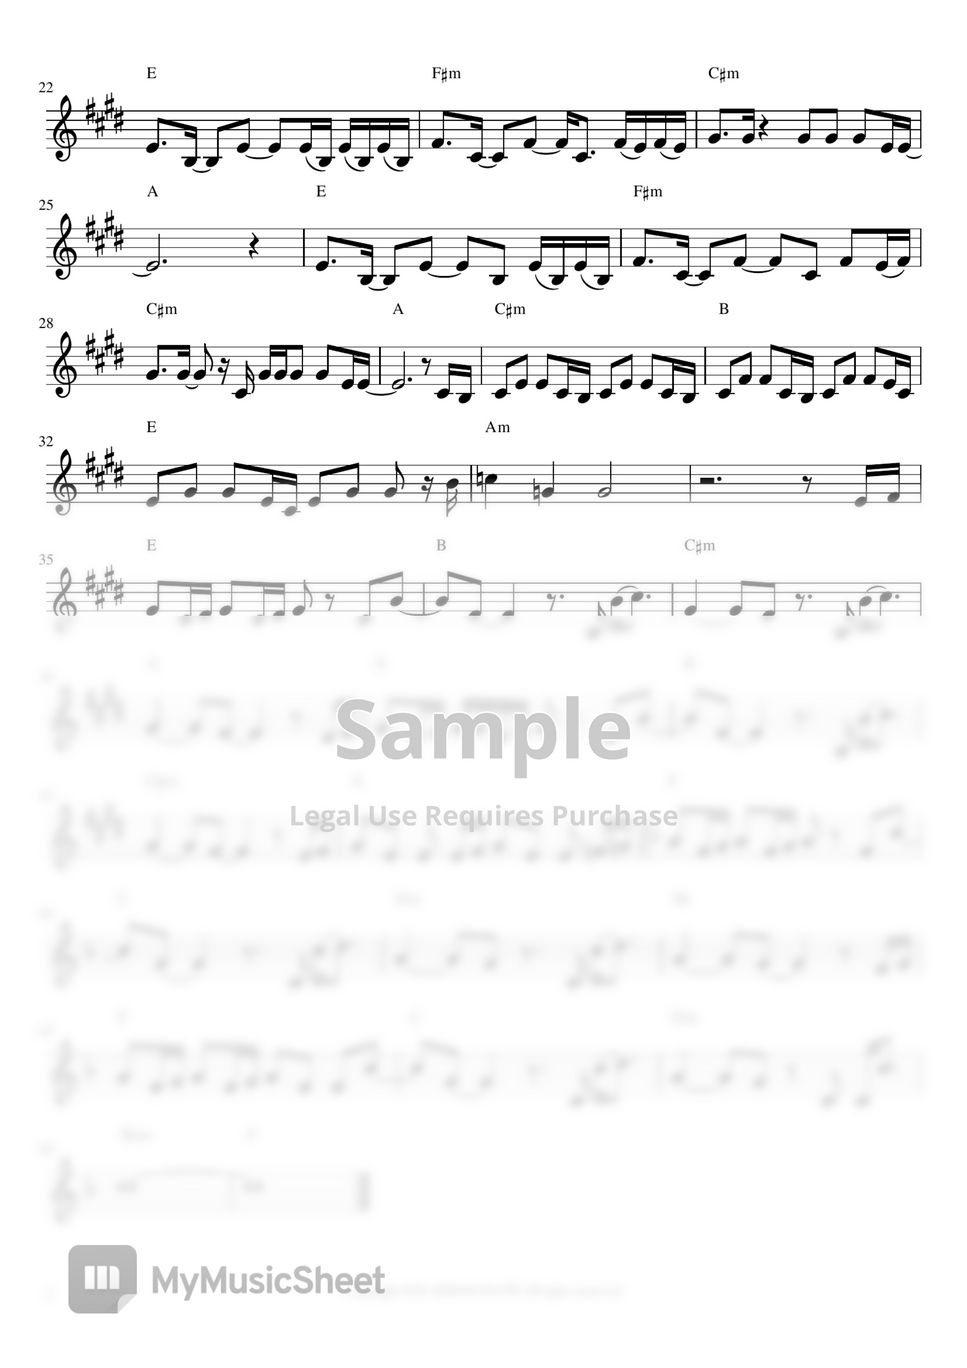 Disney Moana OST - How Far I'll Go (Flute Sheet Music) by sonye flute